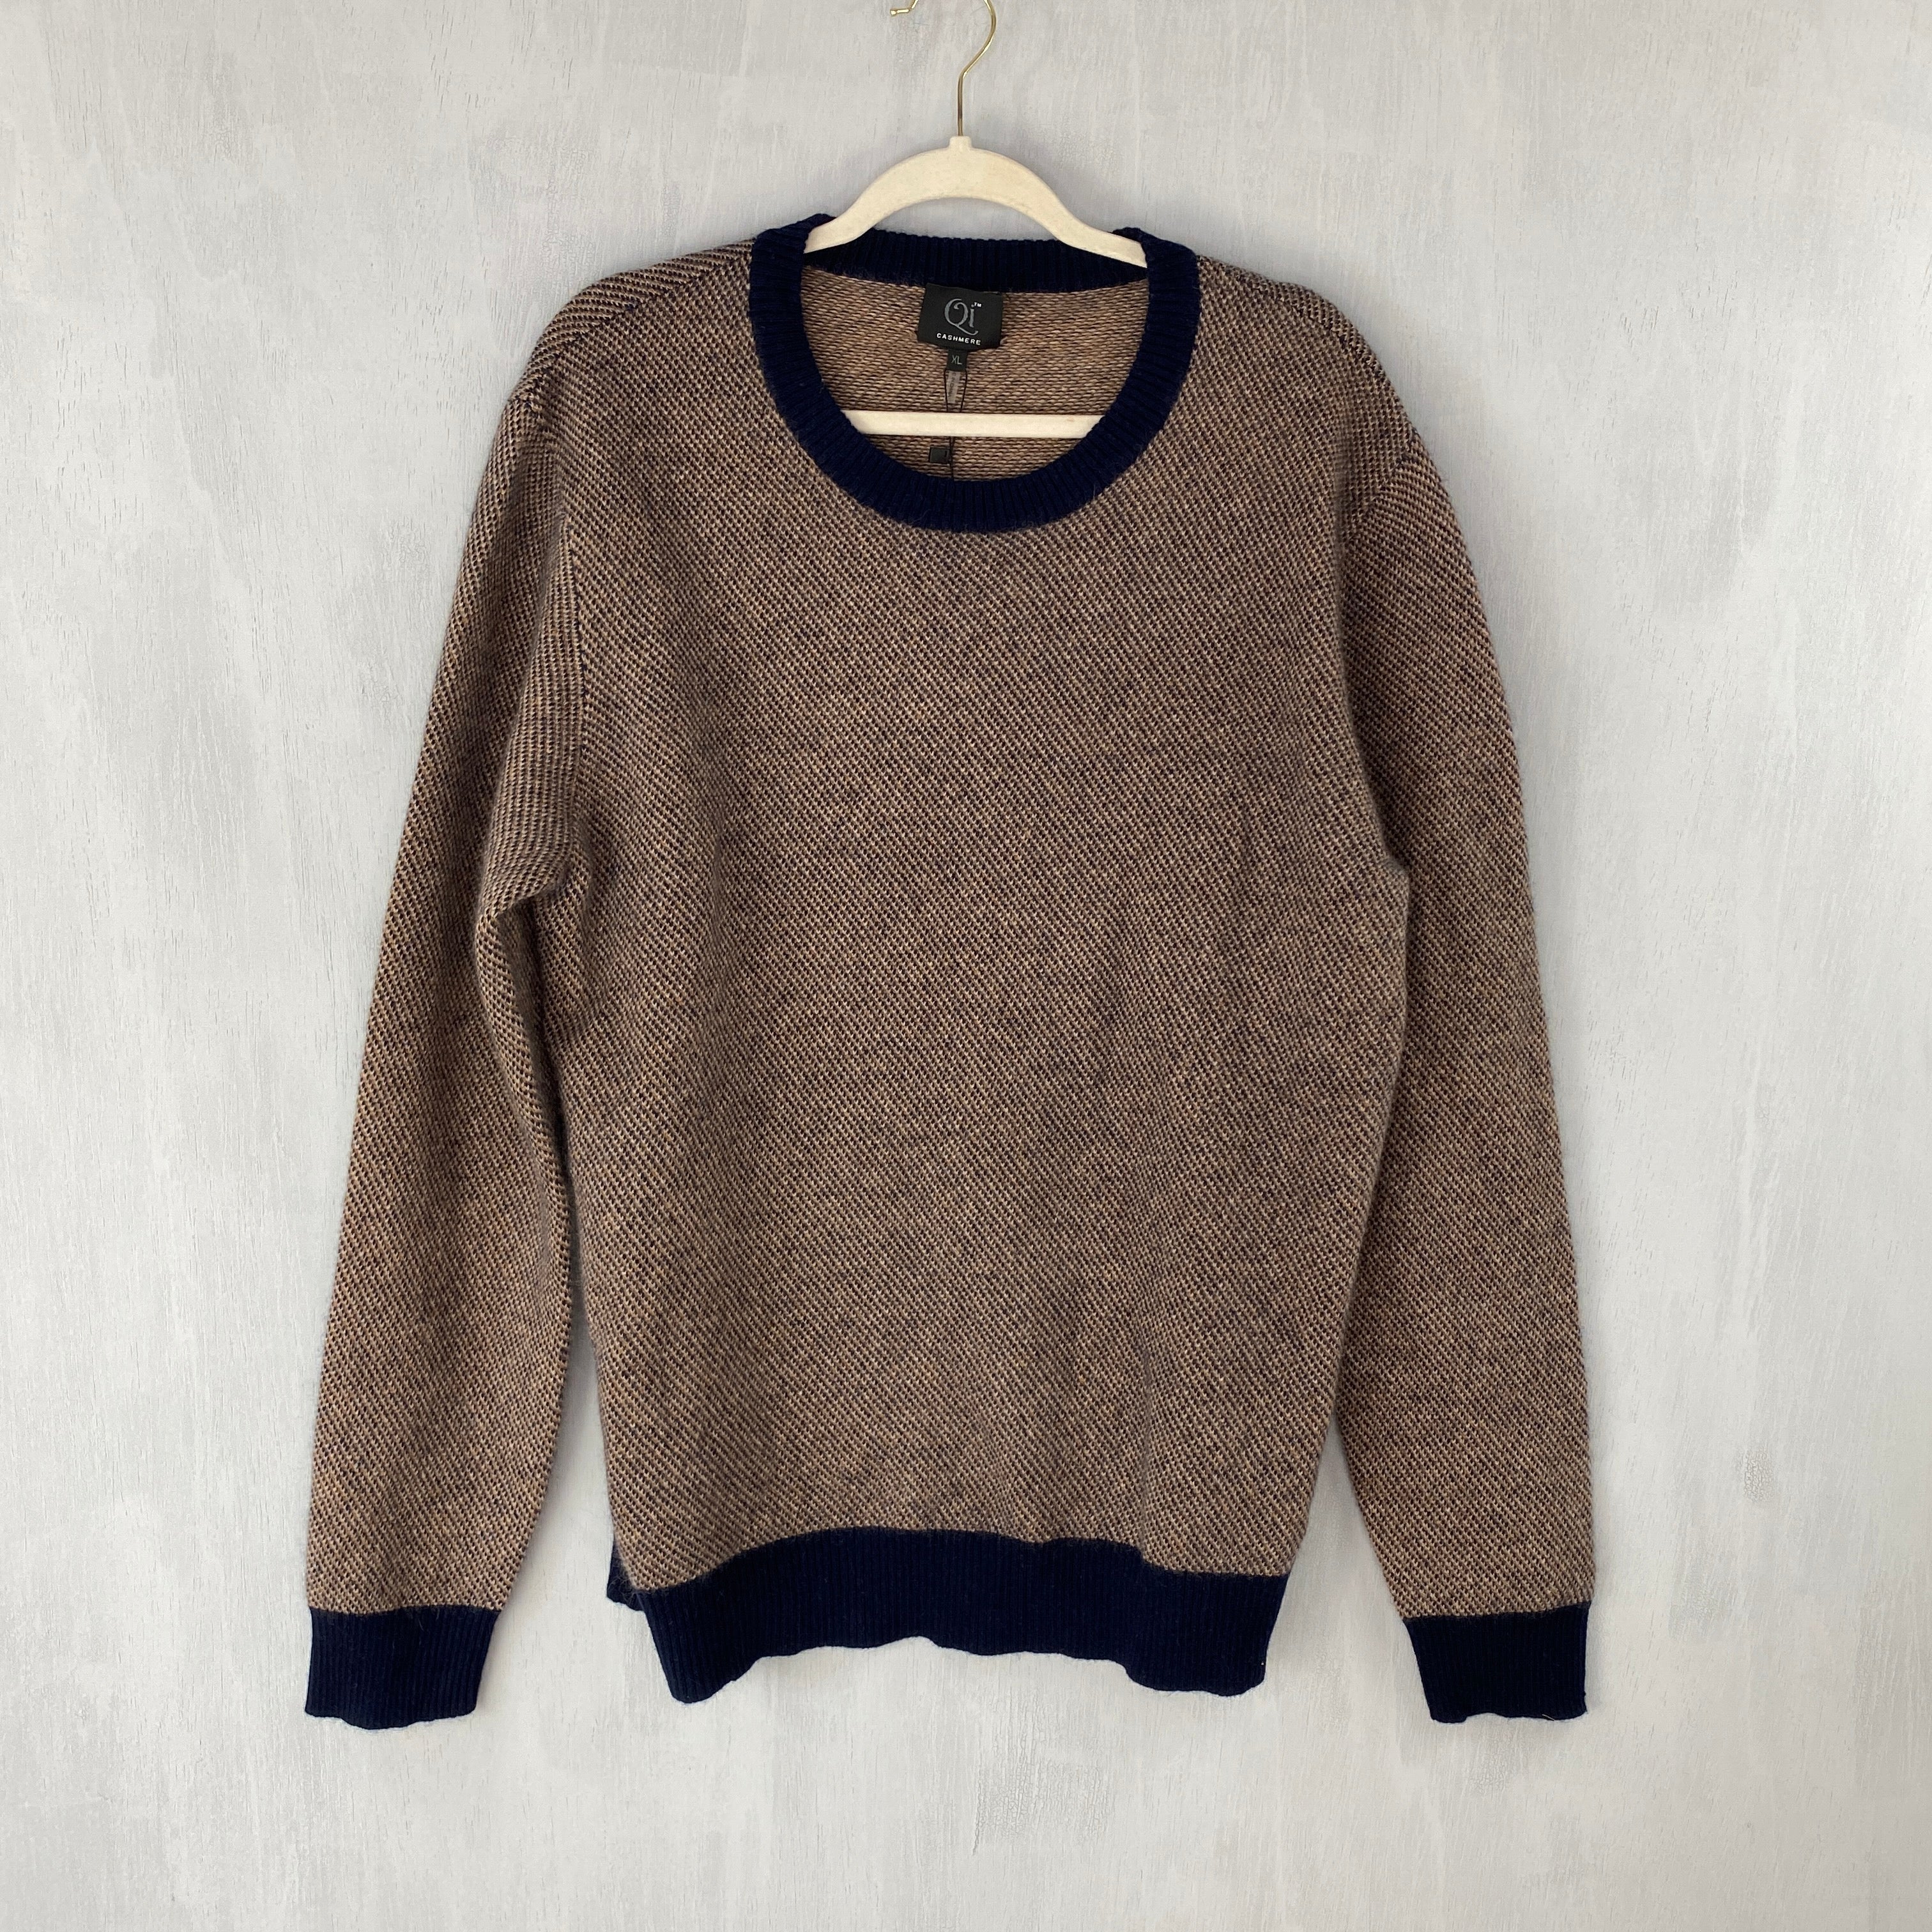 QI Men's Cashmere Crewneck Sweater